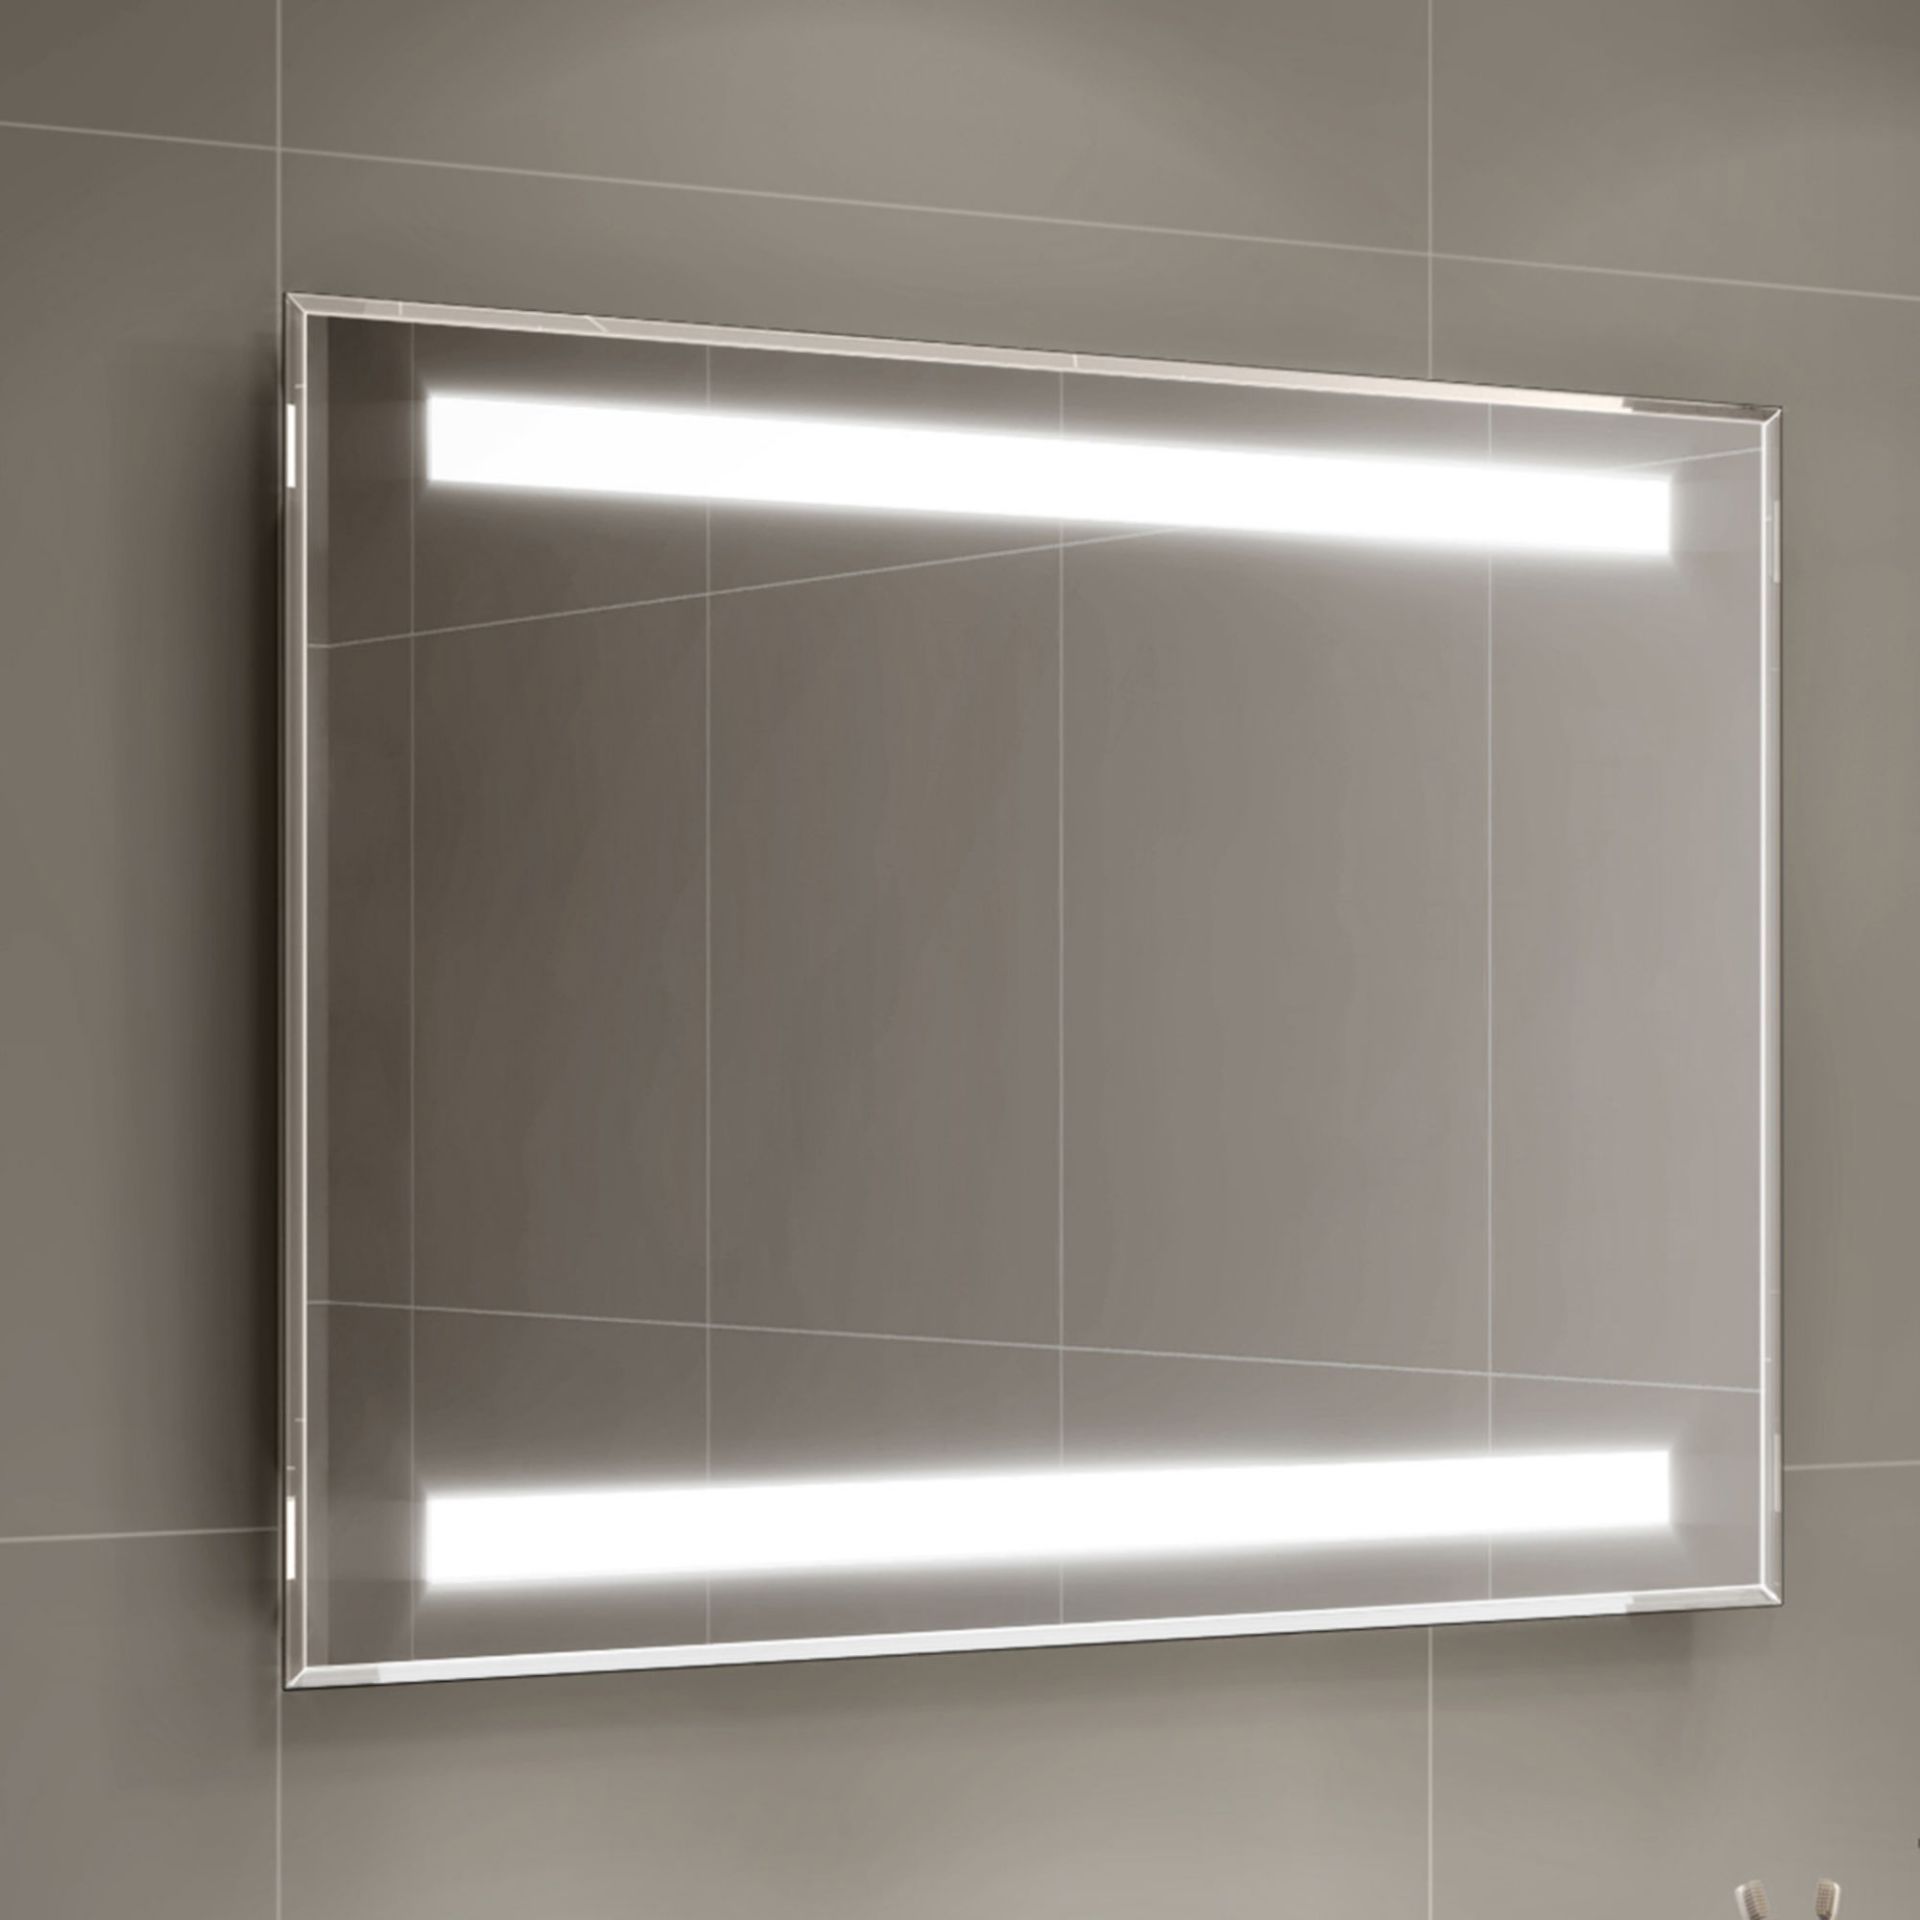 New 600 x 800mm - Omega Illuminated Led Mirror . RRP £499.99.Ml7003.Flattering Led Lights Prov... - Image 2 of 2